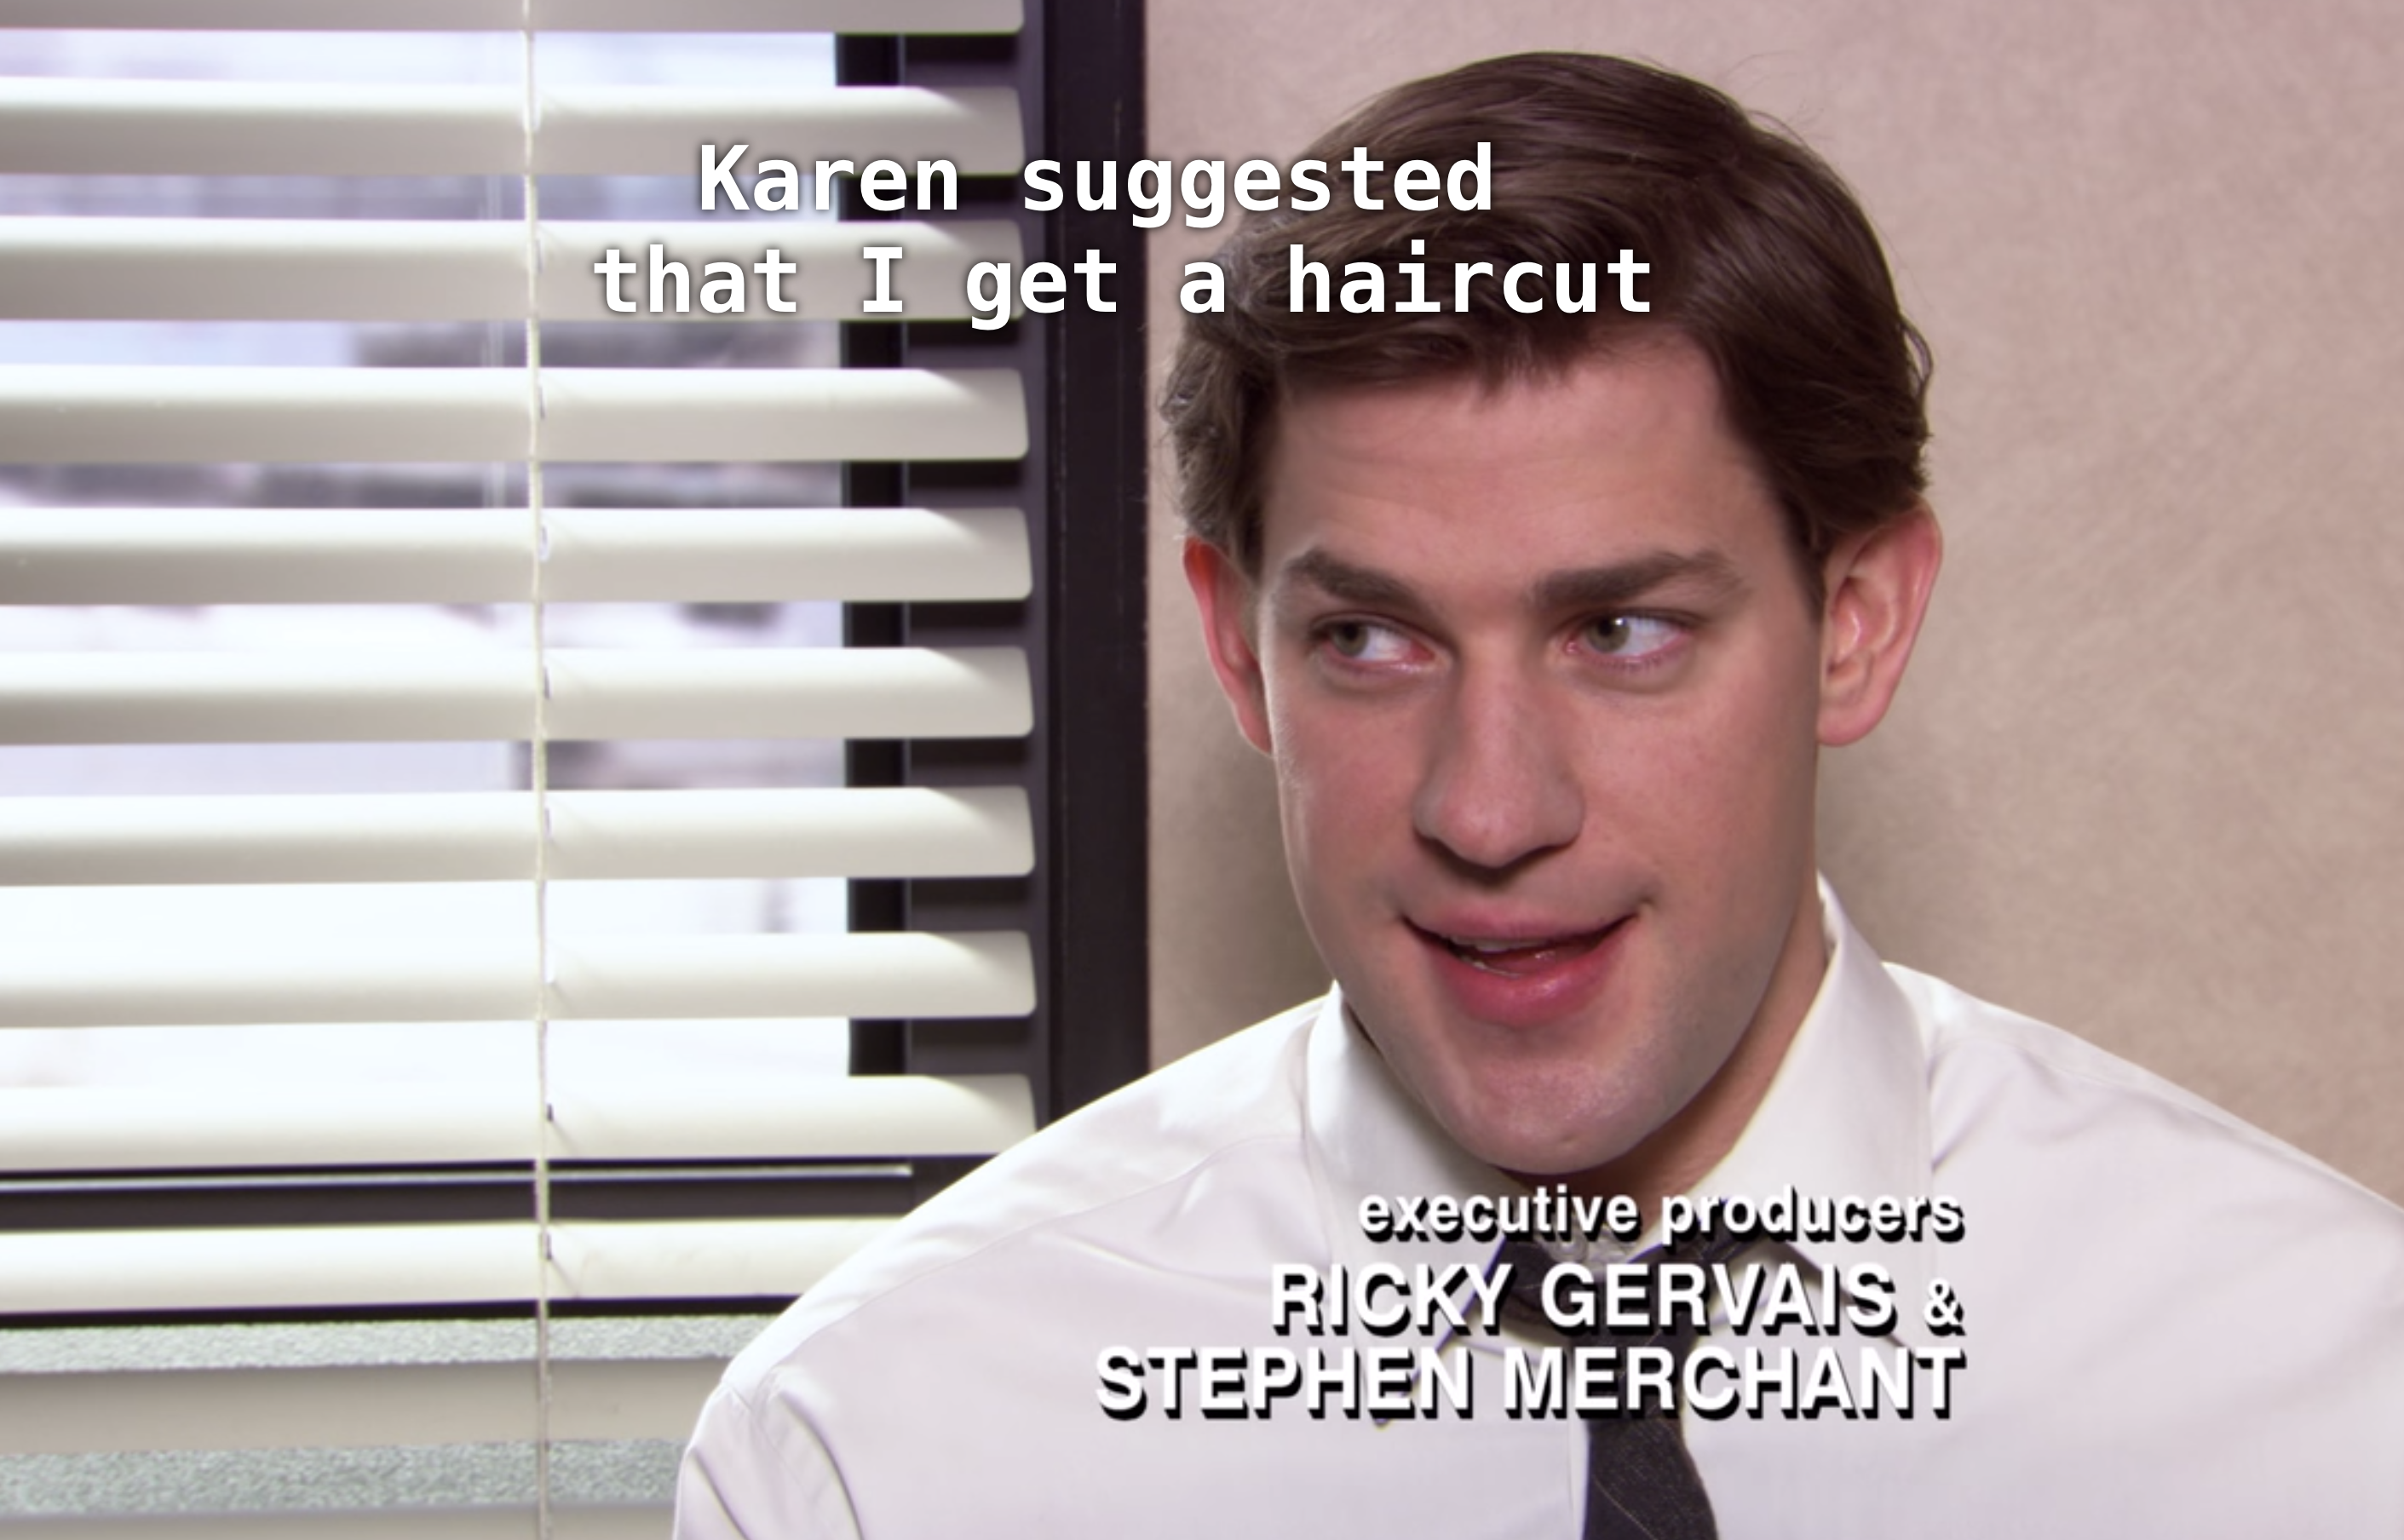 Jim with shorter hair